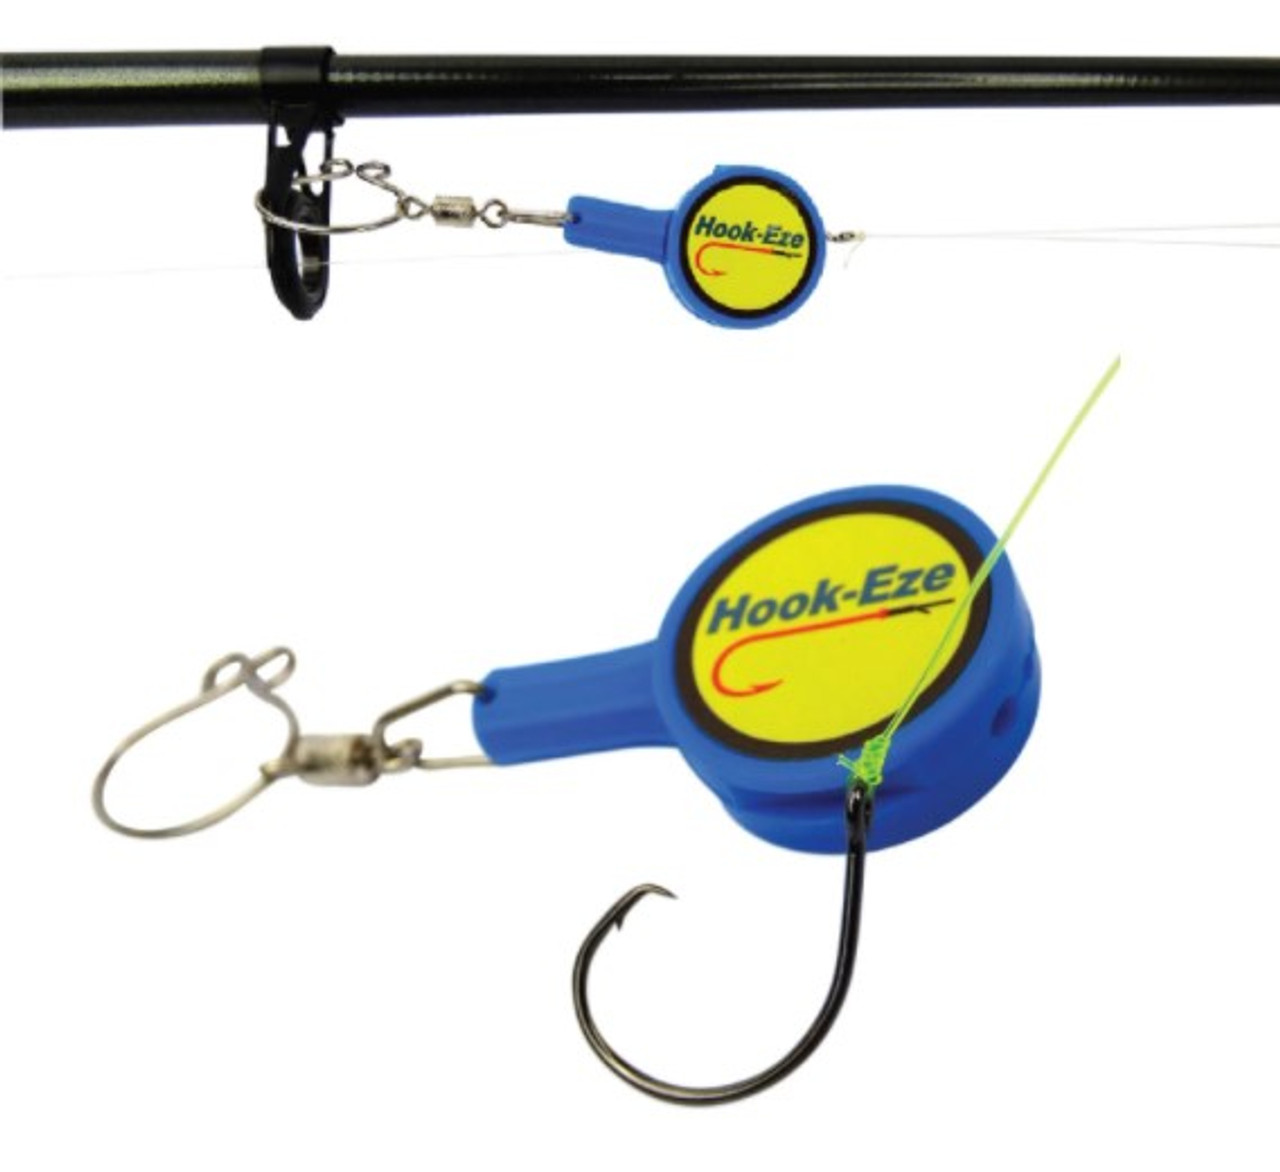 Hook-eze Fishing Knot Tying Tool-Original - Blue - Ramsey Outdoor